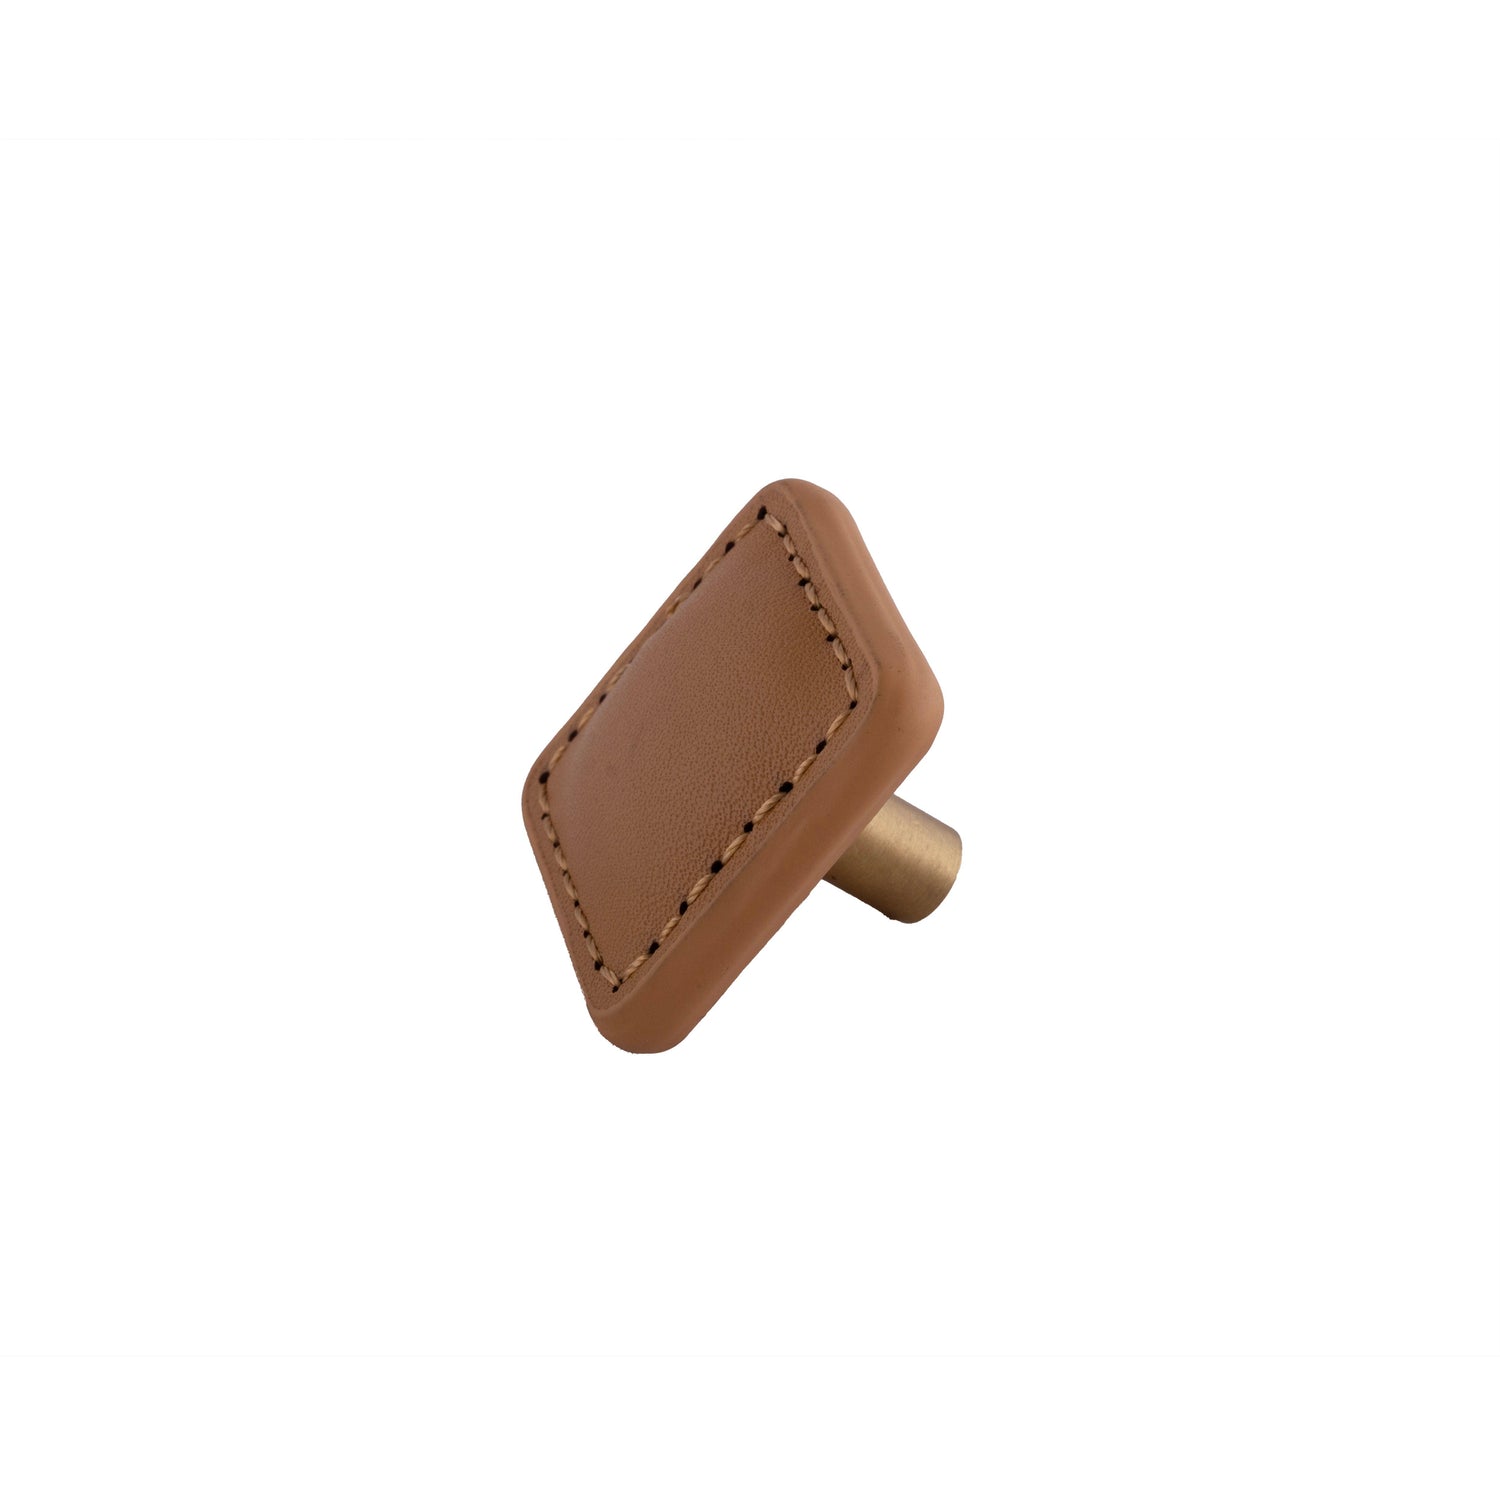 Sofia Square knob Knob 33mm / Brown / Leather - M A N T A R A